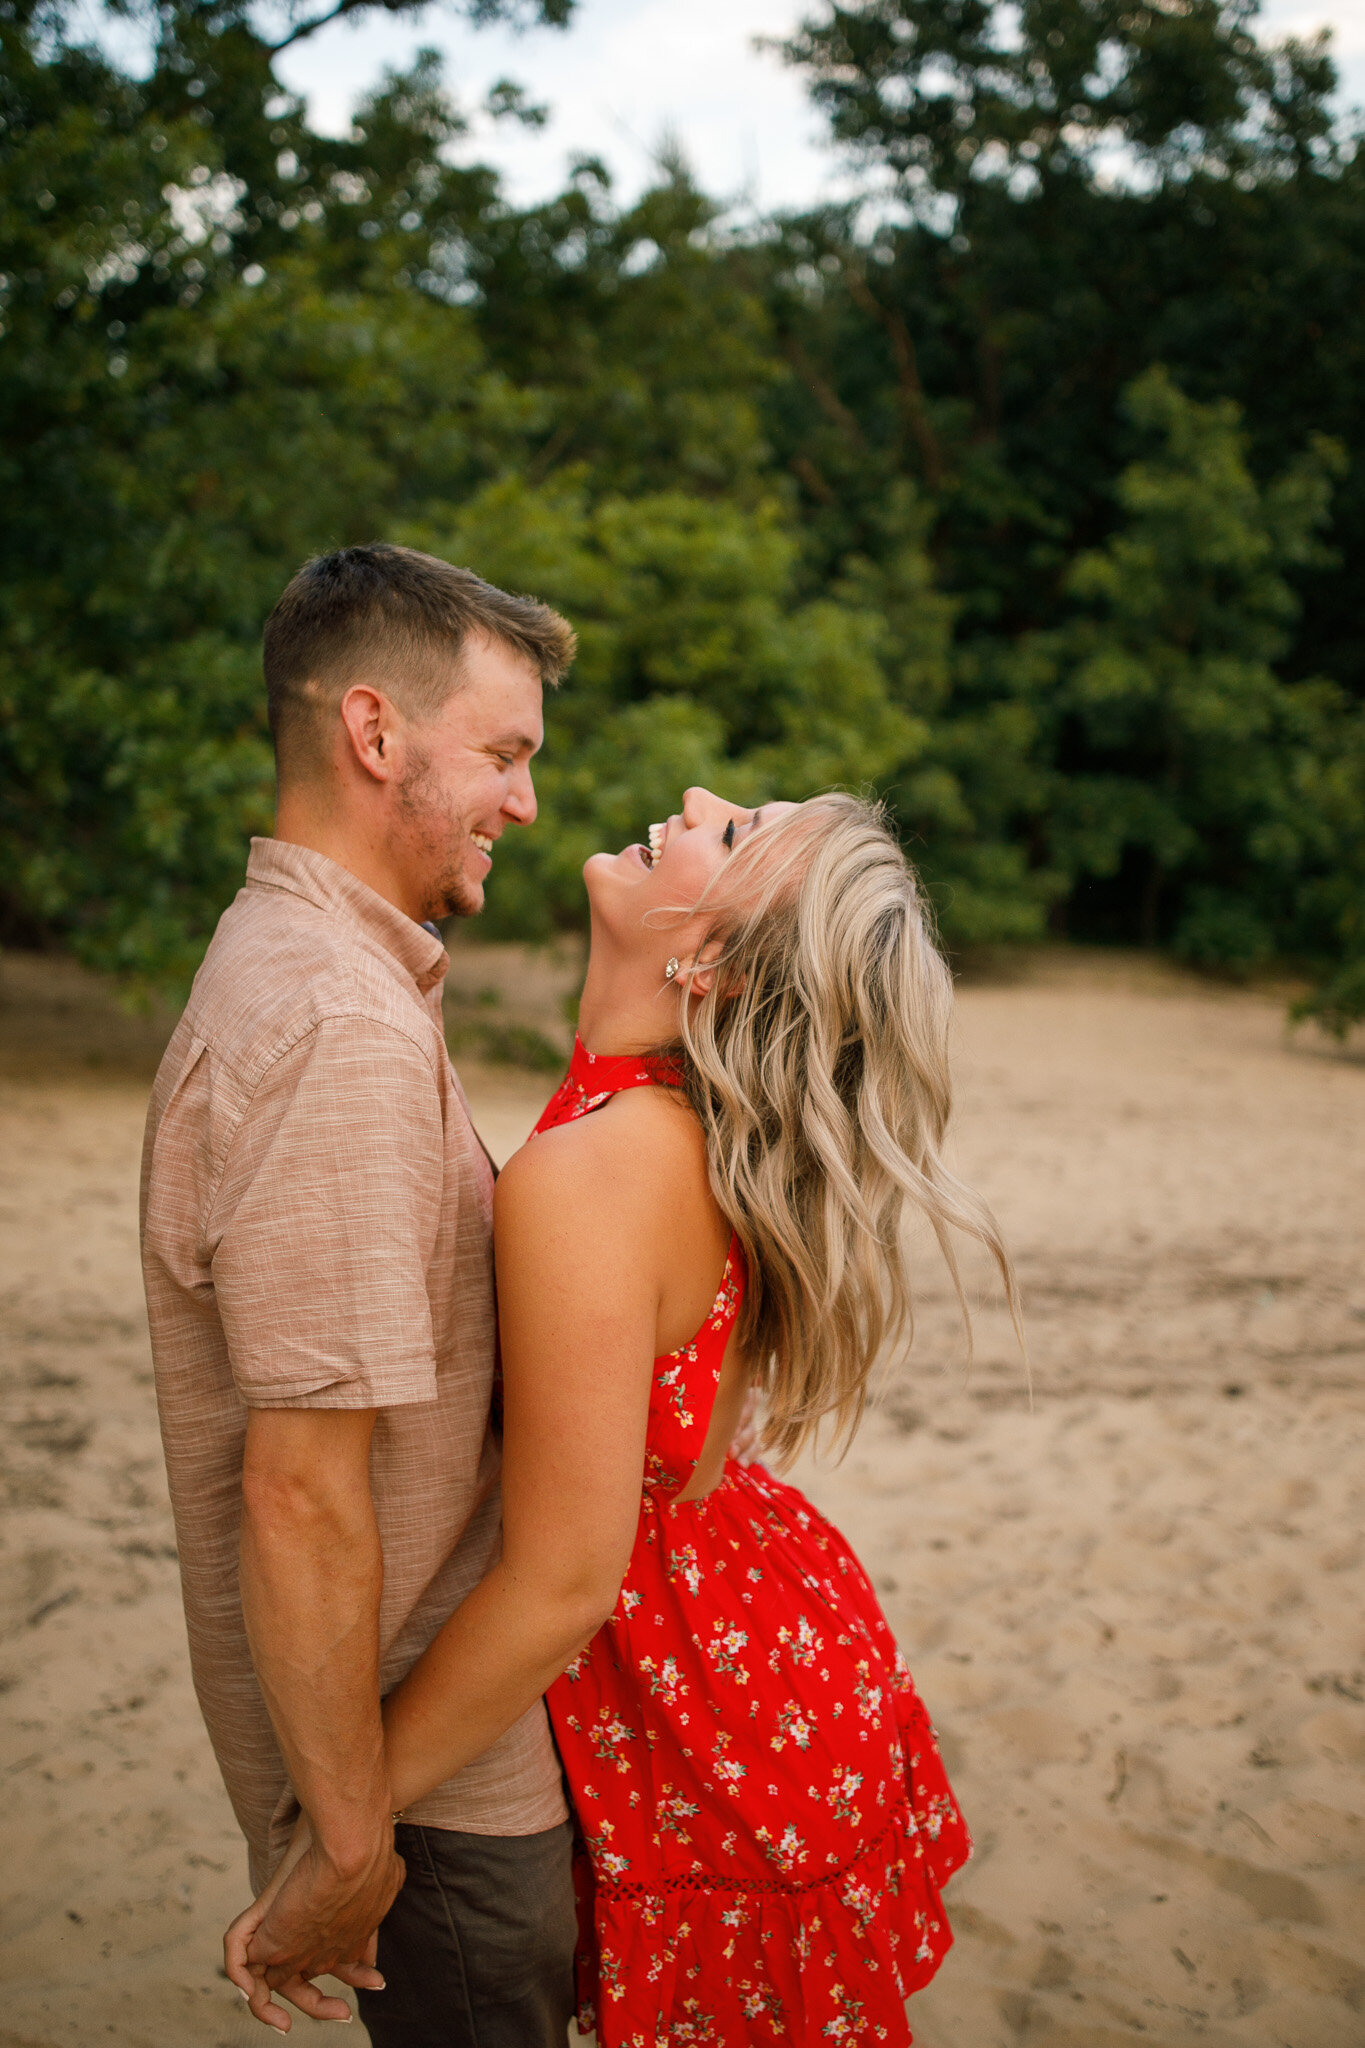 Chris and Kaleen Summer 2020 - Provin Trails - Grand Rapids Wedding Photographer - West Michigan Wedding Photographer - J Darling Photo 018.jpg